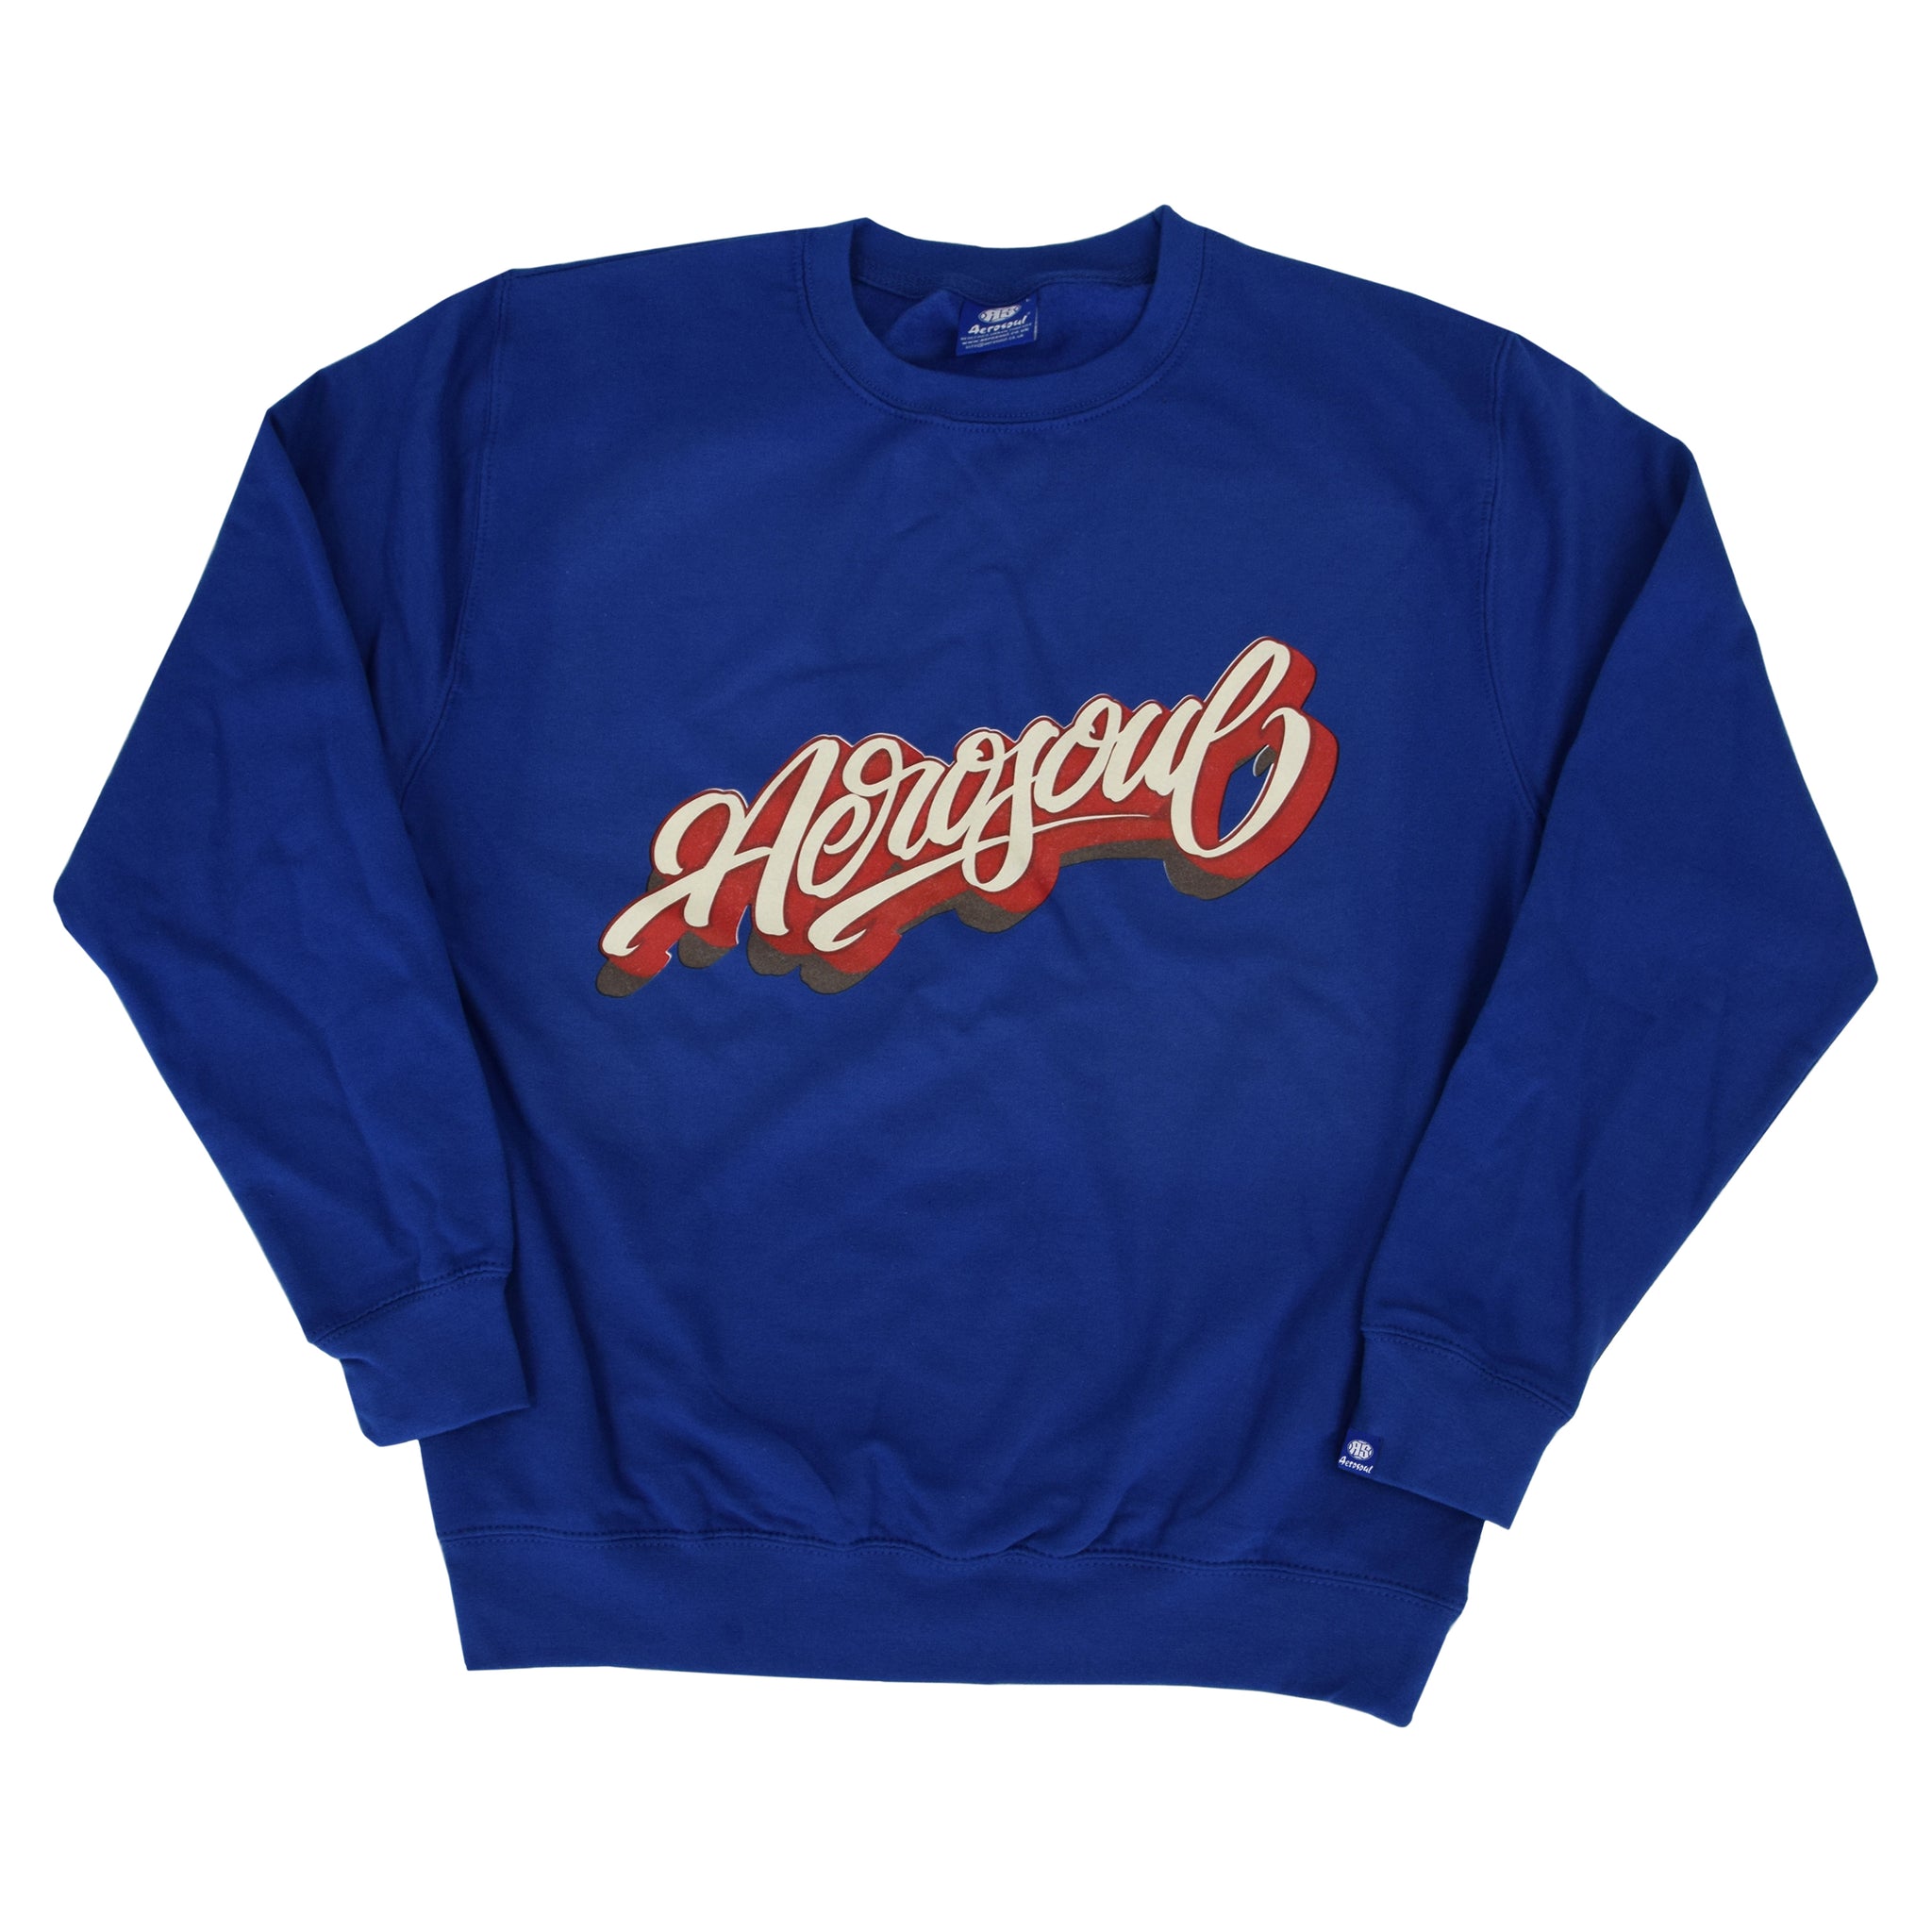 Aero-Script Sweatshirt (Royal Blue)